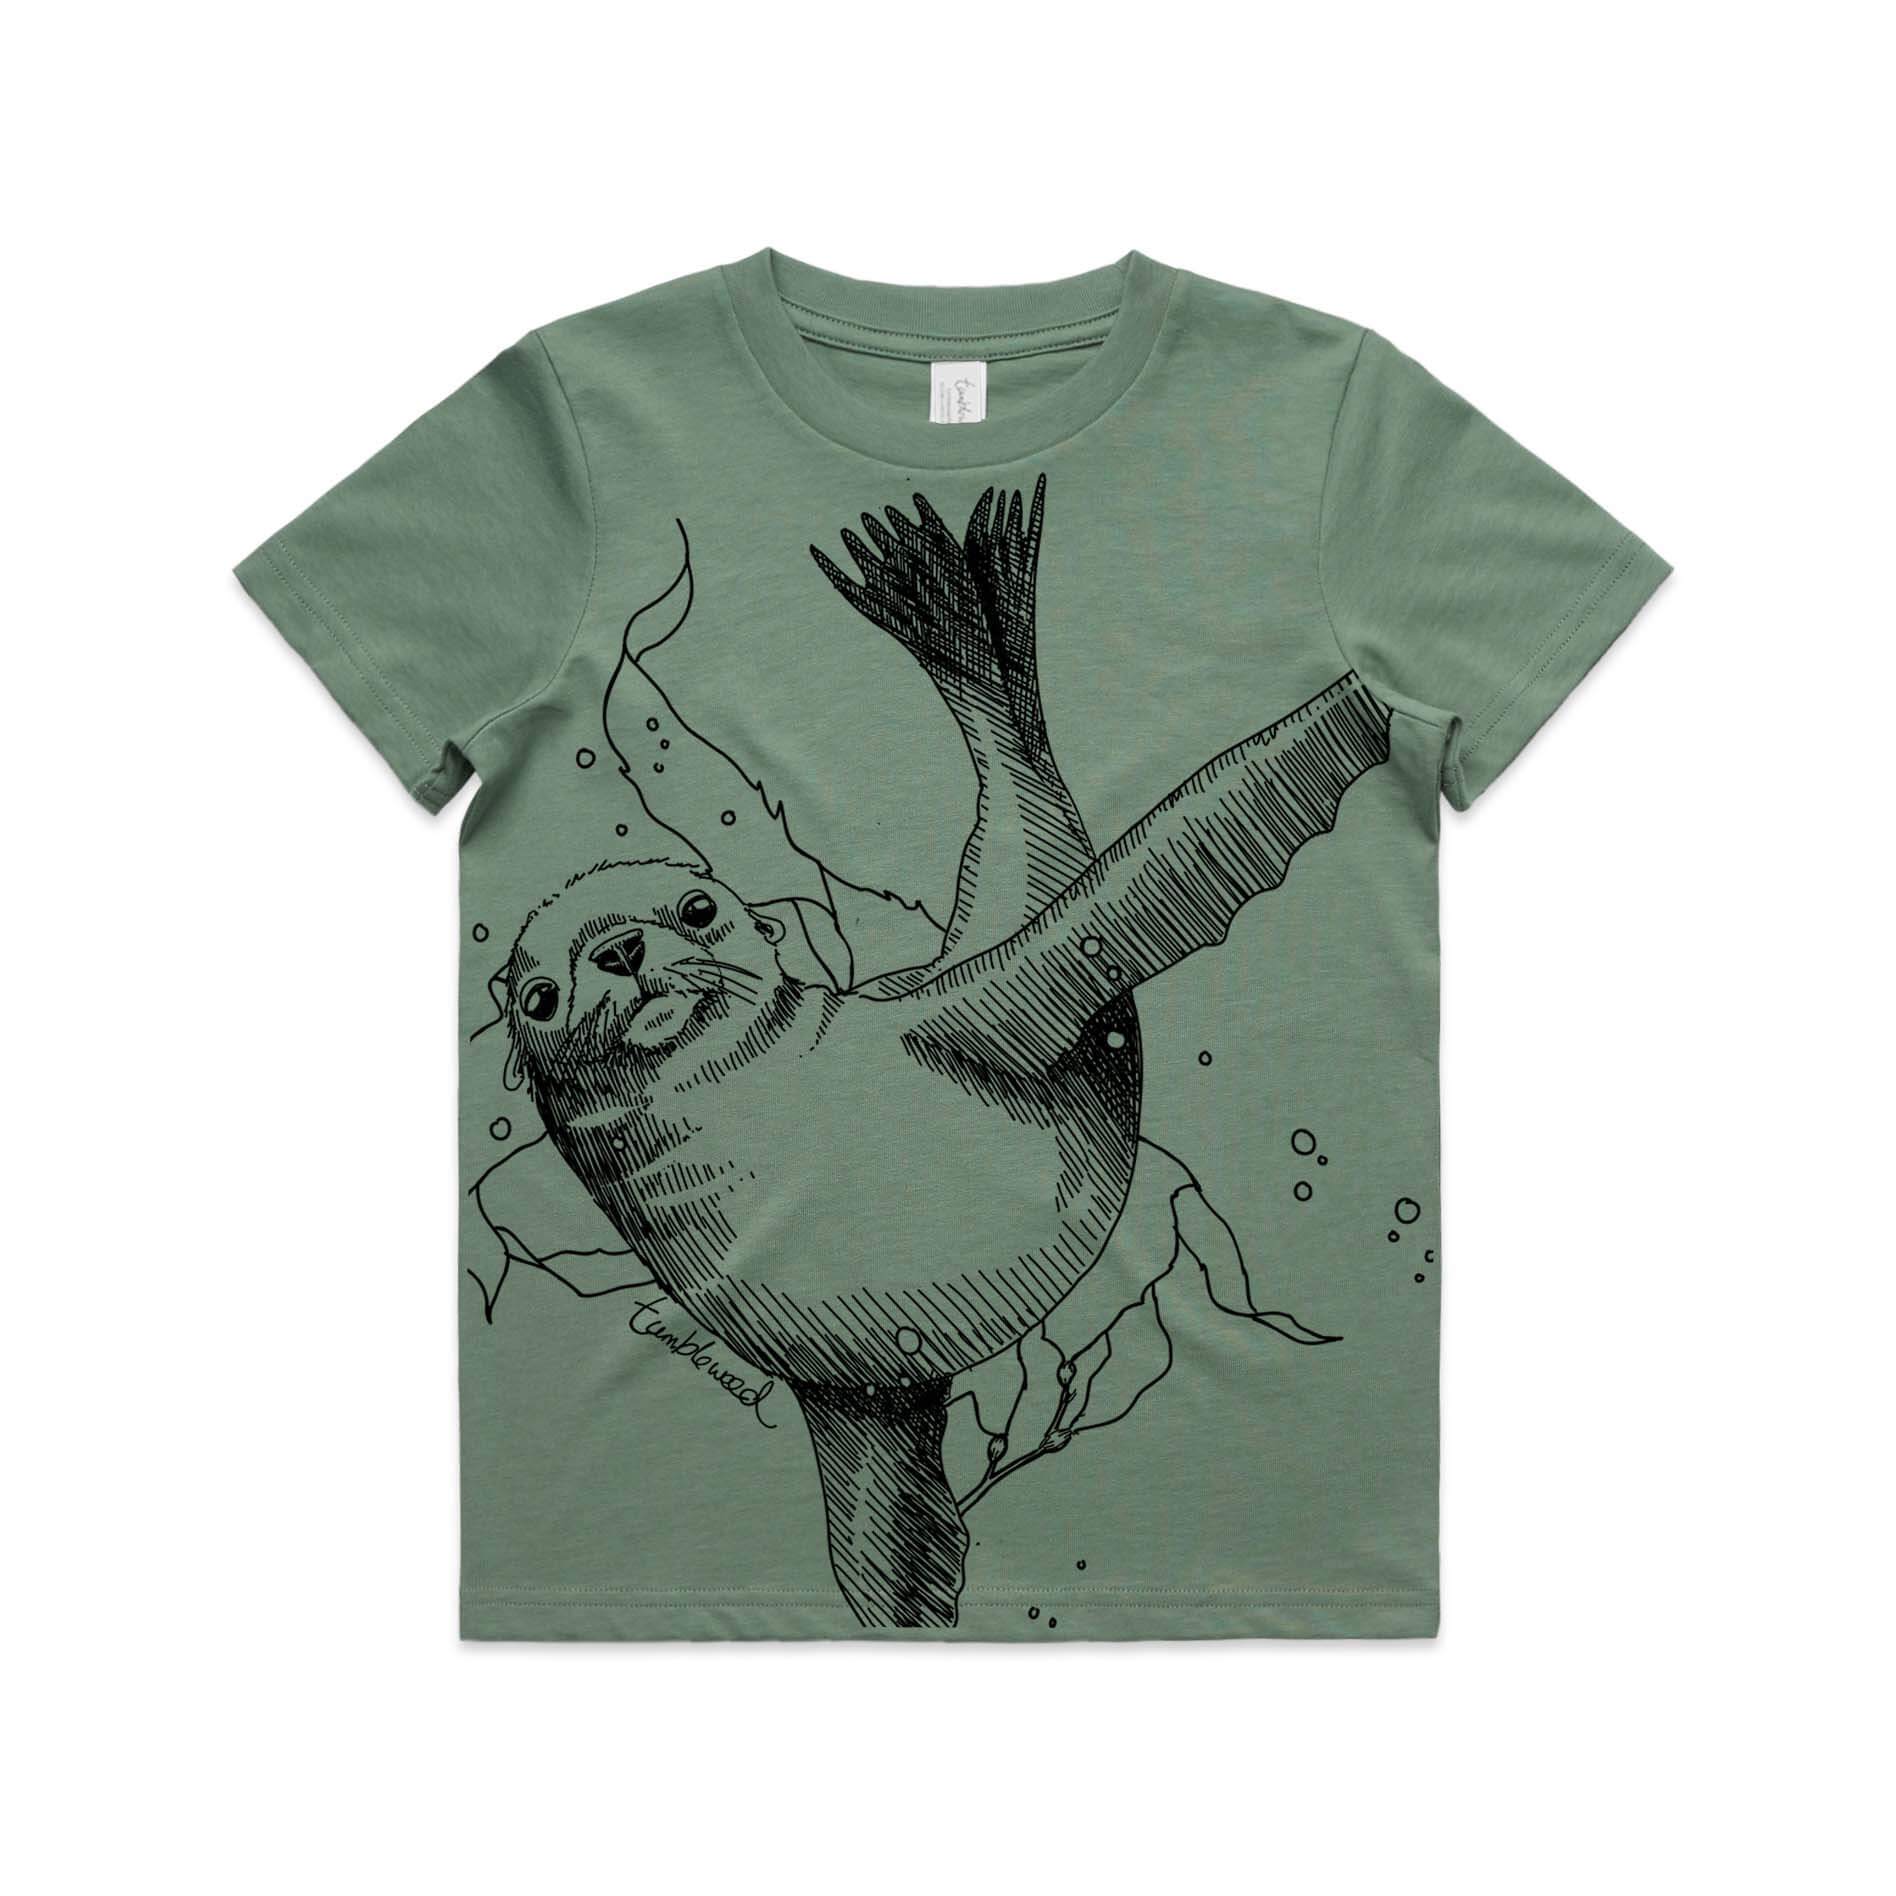 Sage, kids’ t-shirt featuring a screen printed New Zealand sea lion design.